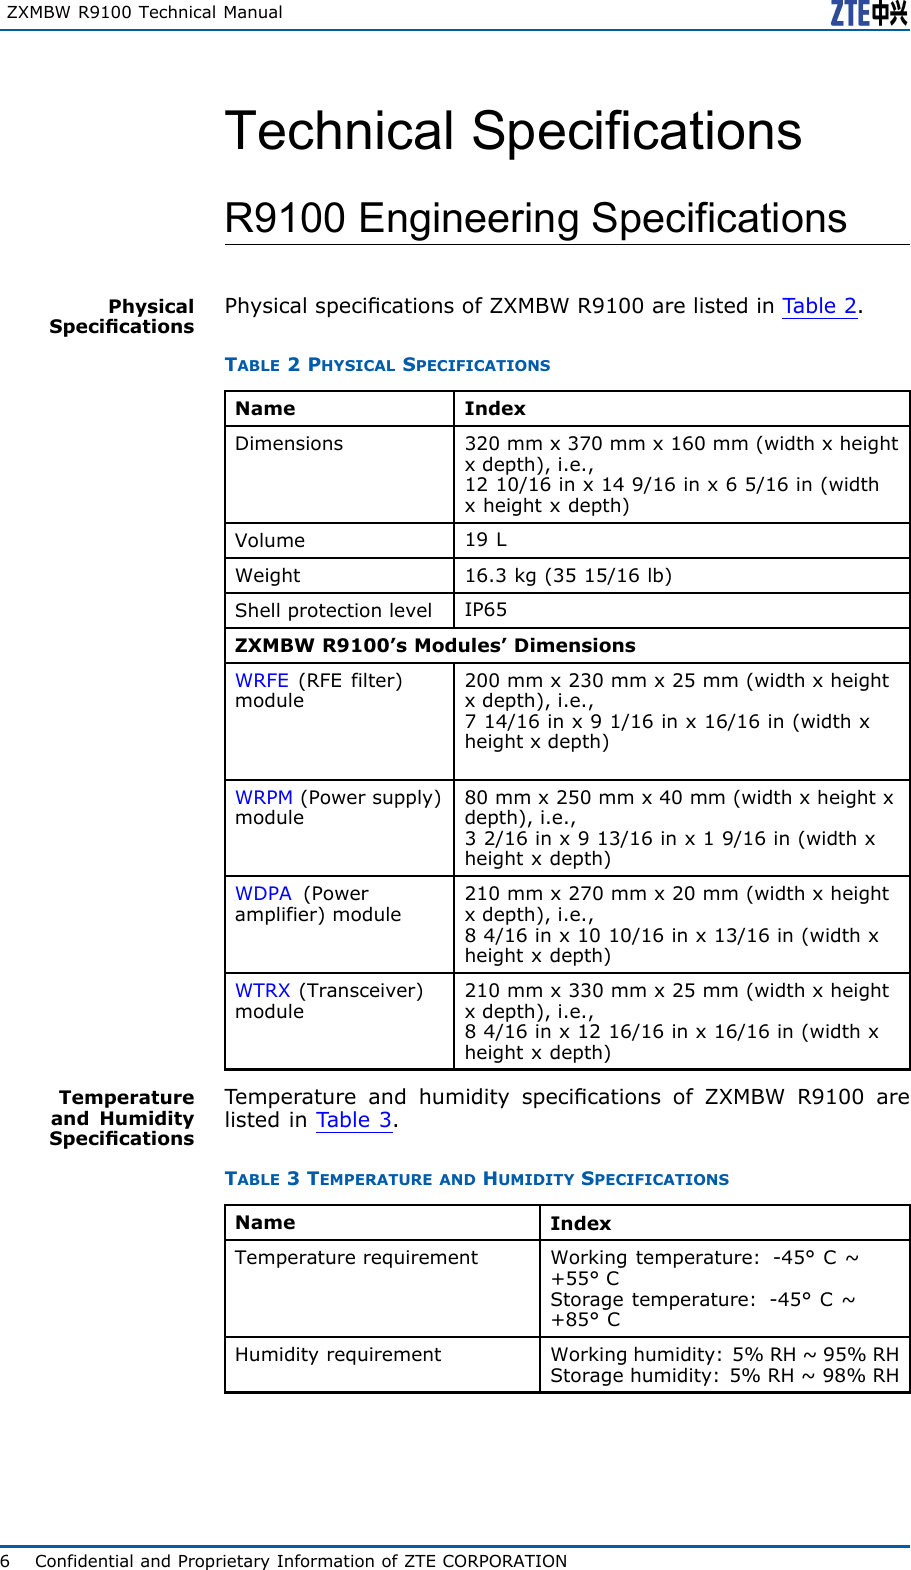 ZXMBWR9100TechnicalManualTechnicalSpecificationsR9100EngineeringSpecificationsPhysicalSpecicationsPhysicalspecicationsofZXMBWR9100arelistedinT able2.TABLE2PHYSICALSPECIFICATIONSNameIndexDimensions320mmx370mmx160mm(widthxheightxdepth),i.e.,1210/16inx149/16inx65/16in(widthxheightxdepth)Volume19LWeight16.3kg(3515/16lb)ShellprotectionlevelIP65ZXMBWR9100’sModules’DimensionsWRFE(RFEfilter)module200mmx230mmx25mm(widthxheightxdepth),i.e.,714/16inx91/16inx16/16in(widthxheightxdepth)WRPM(Powersupply)module80mmx250mmx40mm(widthxheightxdepth),i.e.,32/16inx913/16inx19/16in(widthxheightxdepth)WDPA(Poweramplifier)module210mmx270mmx20mm(widthxheightxdepth),i.e.,84/16inx1010/16inx13/16in(widthxheightxdepth)WTRX(Transceiver)module210mmx330mmx25mm(widthxheightxdepth),i.e.,84/16inx1216/16inx16/16in(widthxheightxdepth)TemperatureandHumiditySpecicationsTemperatureandhumidityspecicationsofZXMBWR9100arelistedinT able3.TABLE3TEMPERATUREANDHUMIDITYSPECIFICATIONSNameIndexTemperaturerequirementWorkingtemperature:-45°C~+55°CStoragetemperature:-45°C~+85°CHumidityrequirementWorkinghumidity:5%RH~95%RHStoragehumidity:5%RH~98%RH6ConfidentialandProprietaryInformationofZTECORPORATION